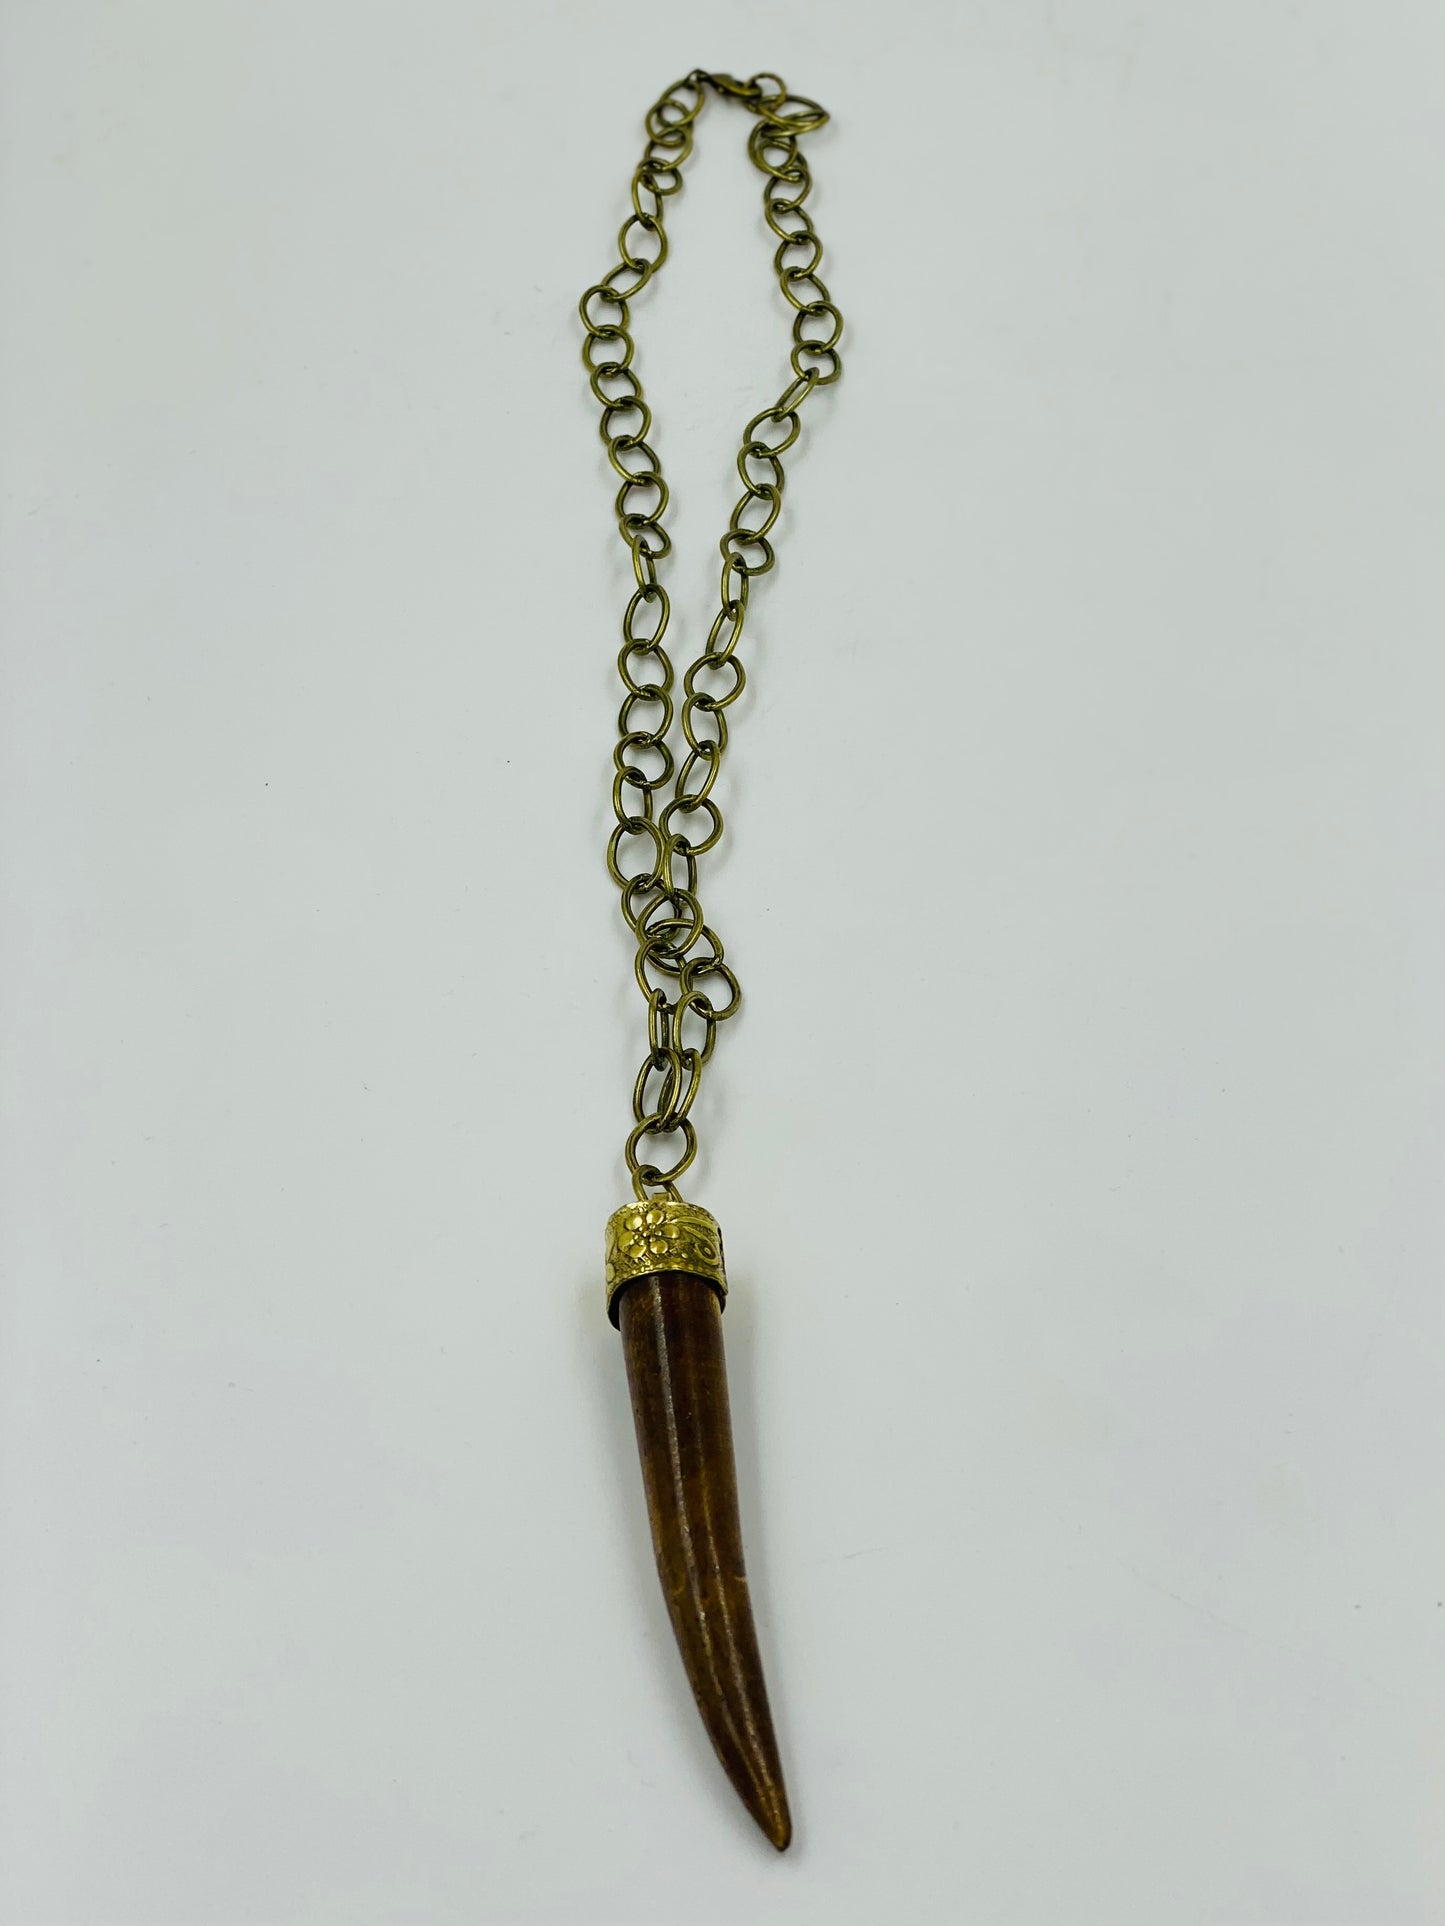 Horn Bone Necklace on Antique Copper